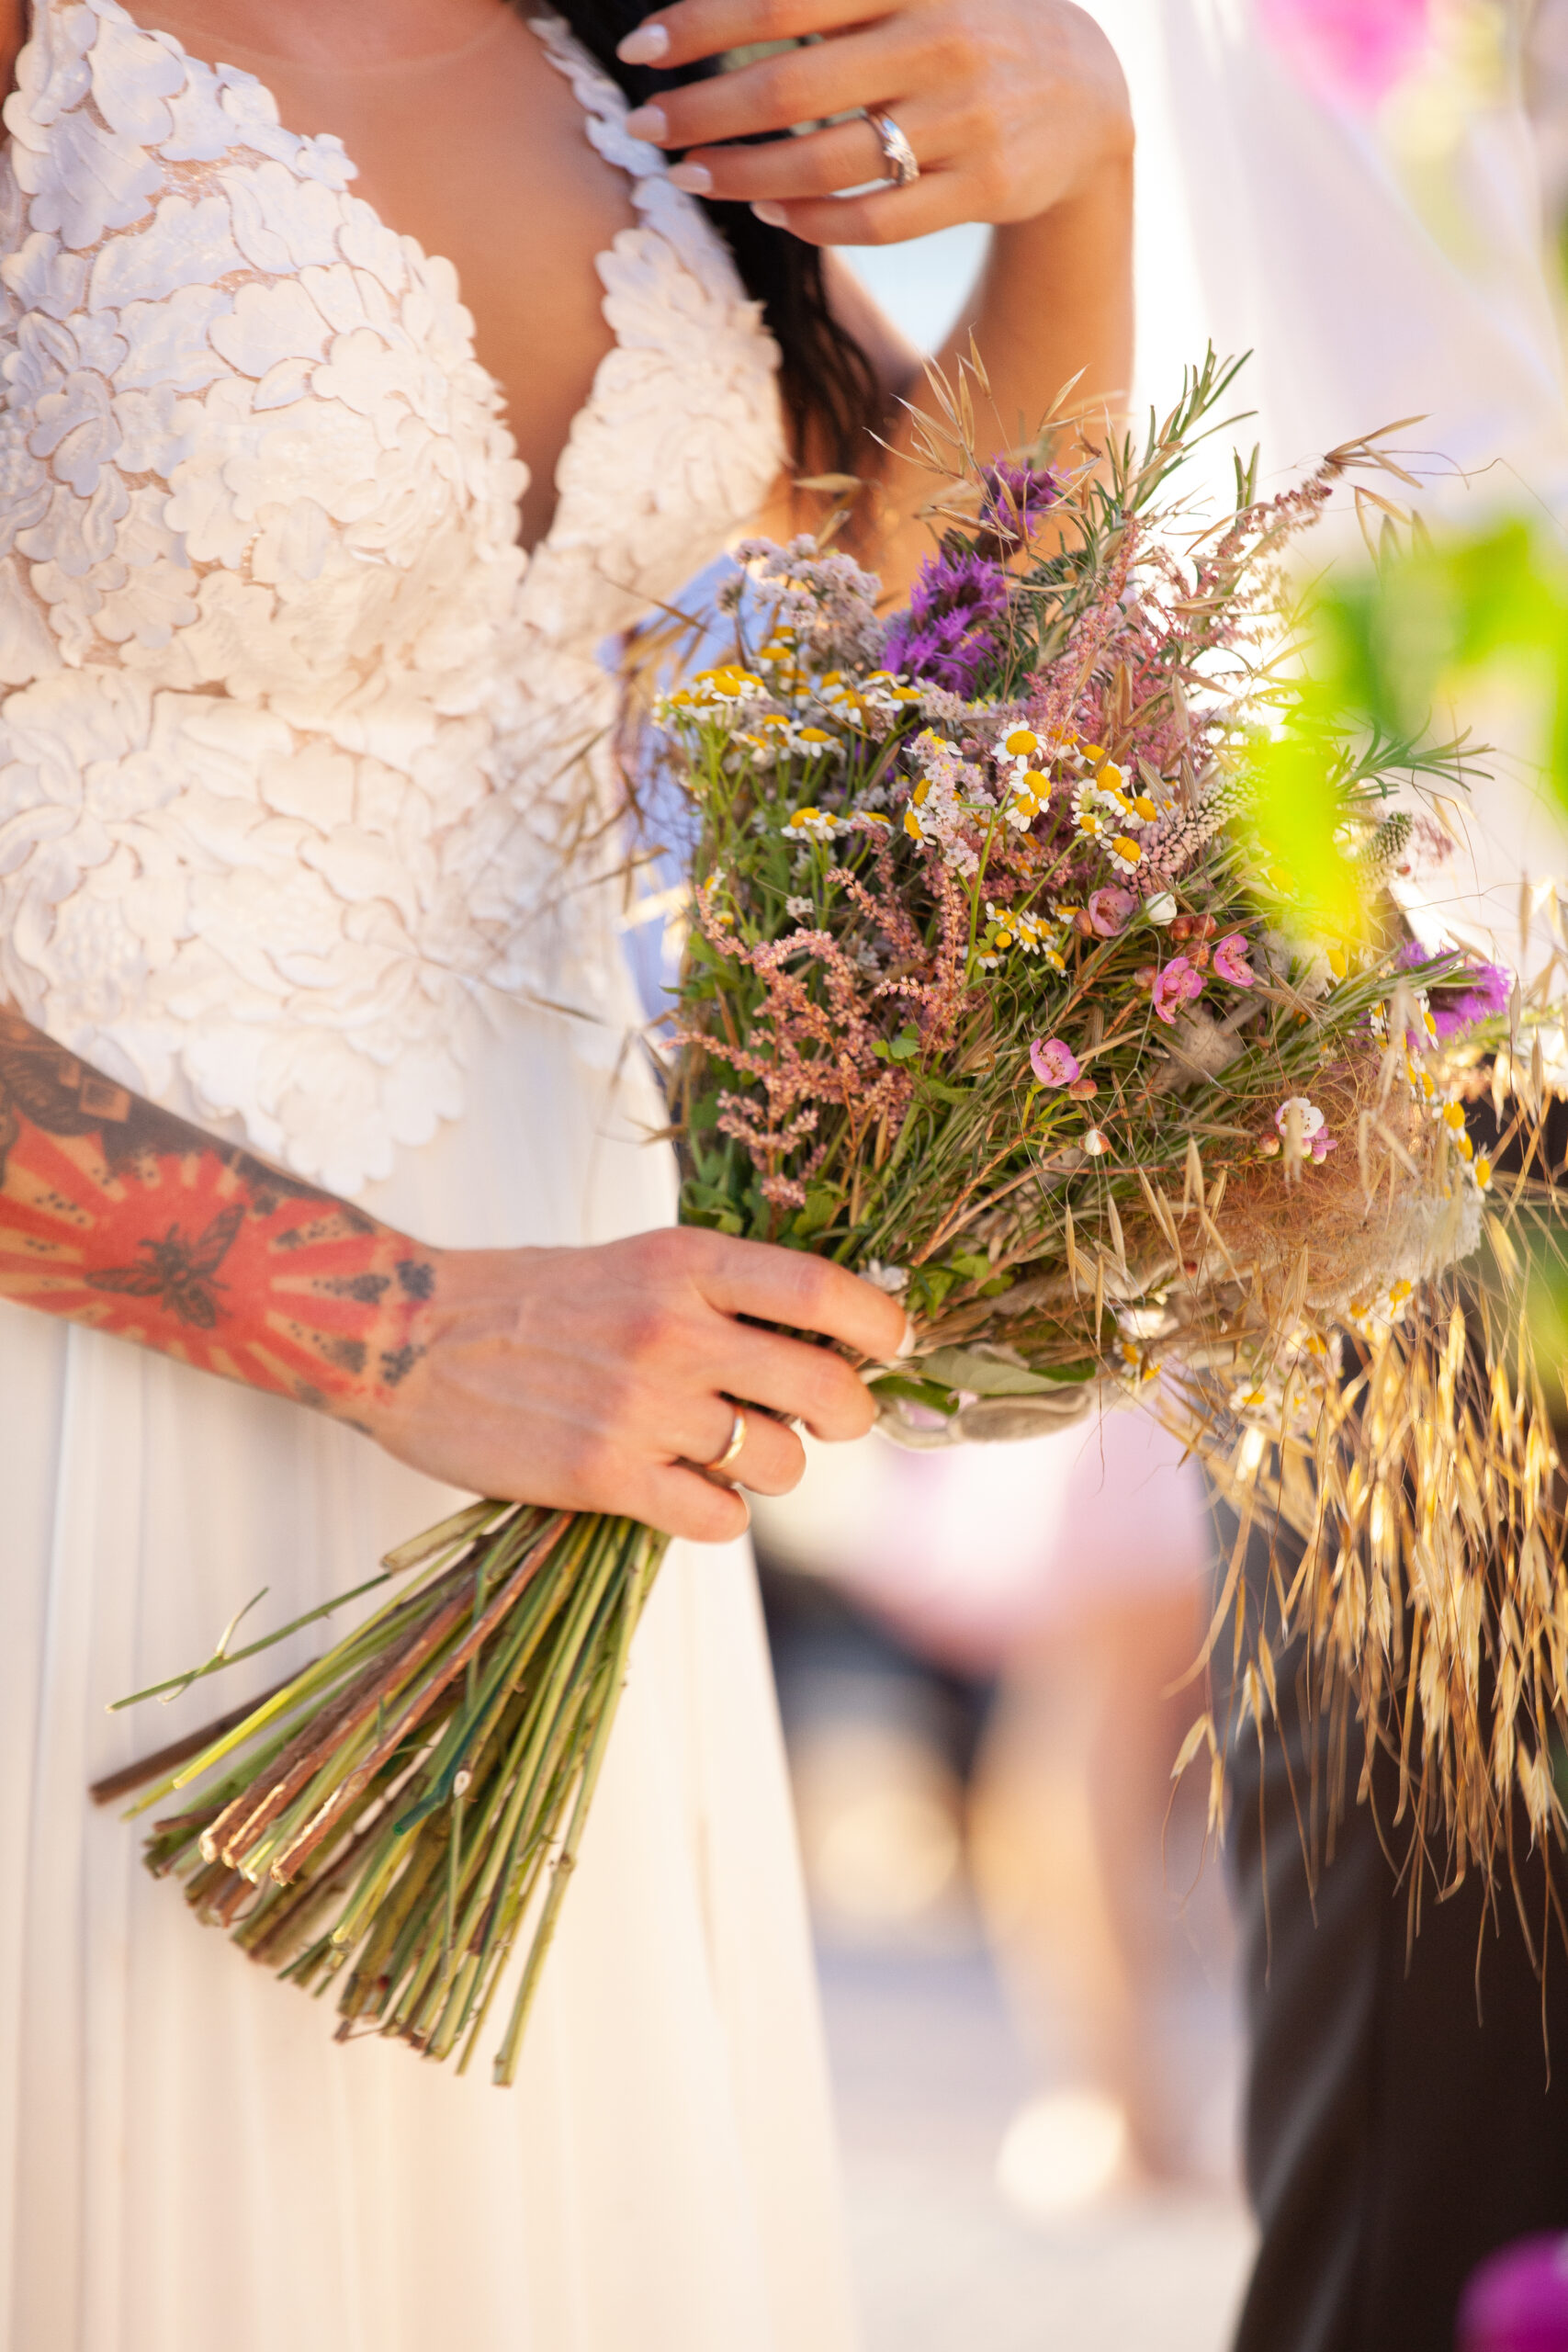 Bridal bouquet Athens riviera wedding νυφική ανθοδέσμη μπουκέτο γάμου στην Αθηναϊκή ριβιέρα